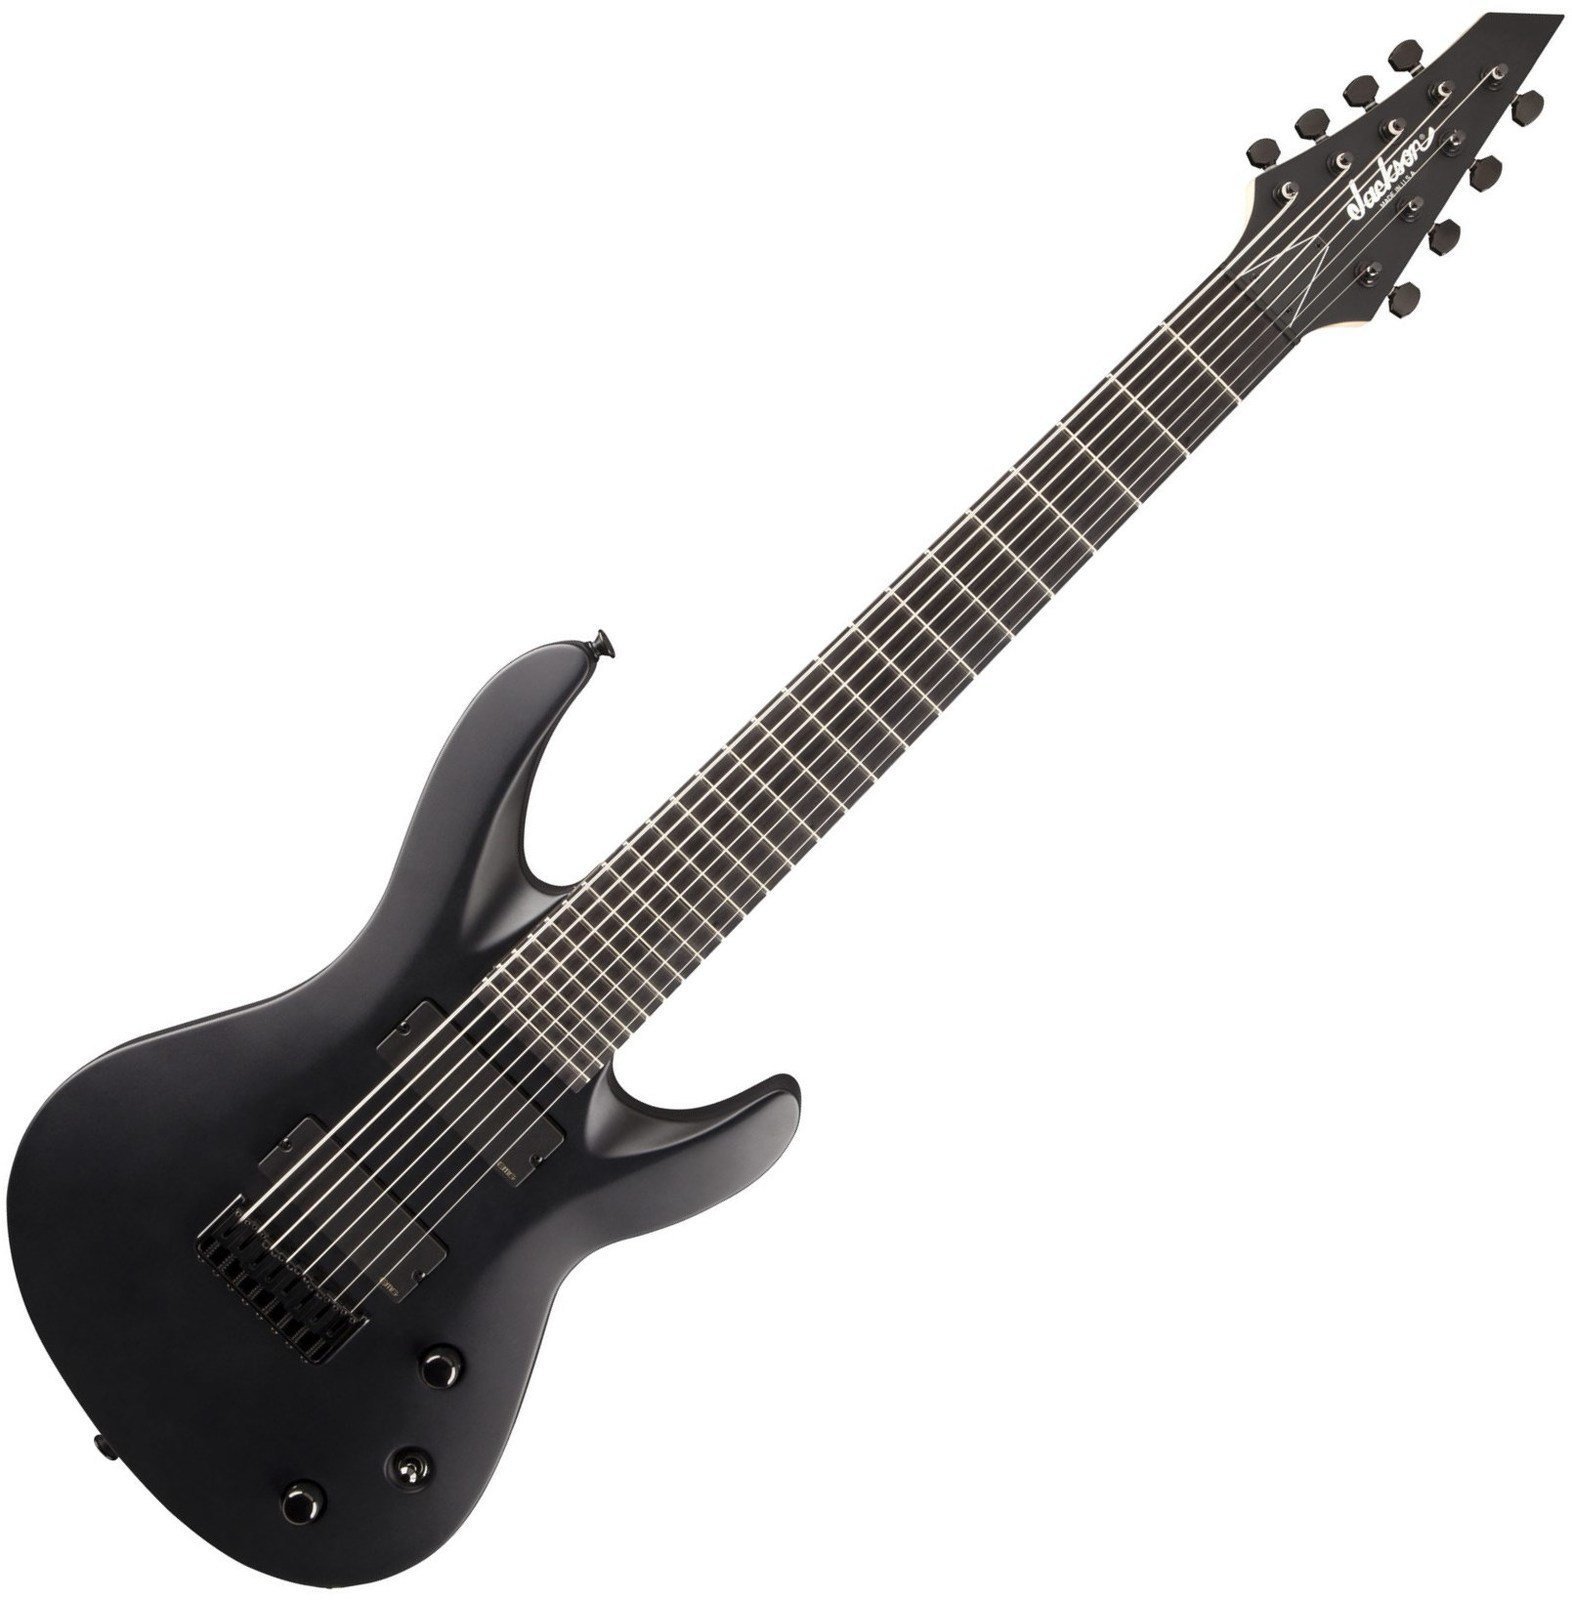 8-string electric guitar Jackson USA Select B8 Deluxe Satin Black